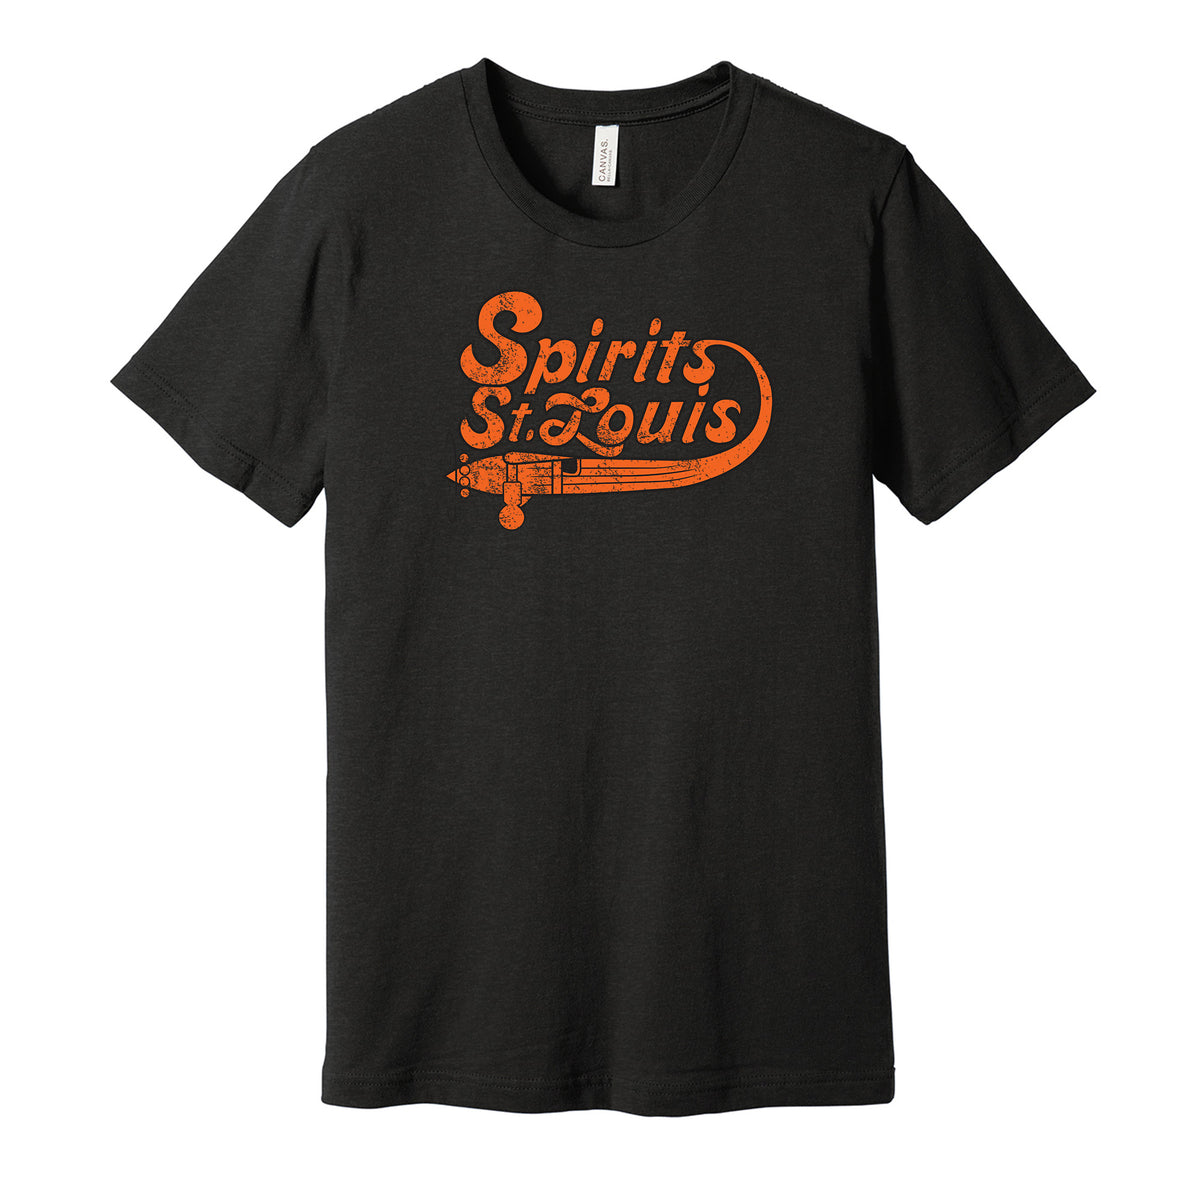 Spirits of St Louis ABA Vintage Basketball Jersey T-shirt FREE -   Denmark